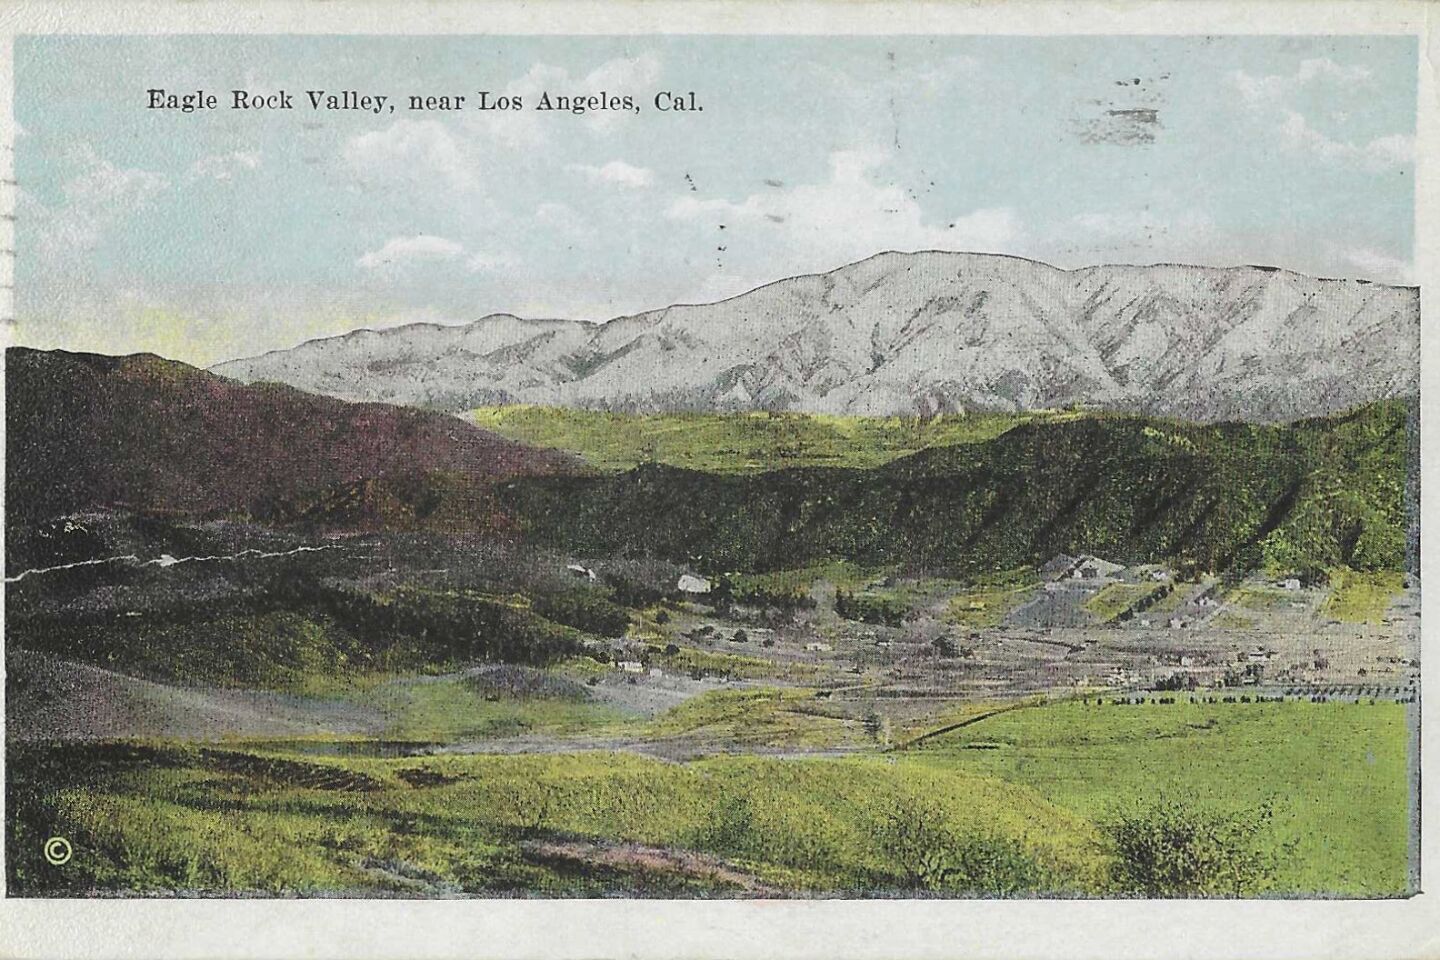 Vintage postcard depicts "Eagle Rock Valley, near Los Angeles, Cal."